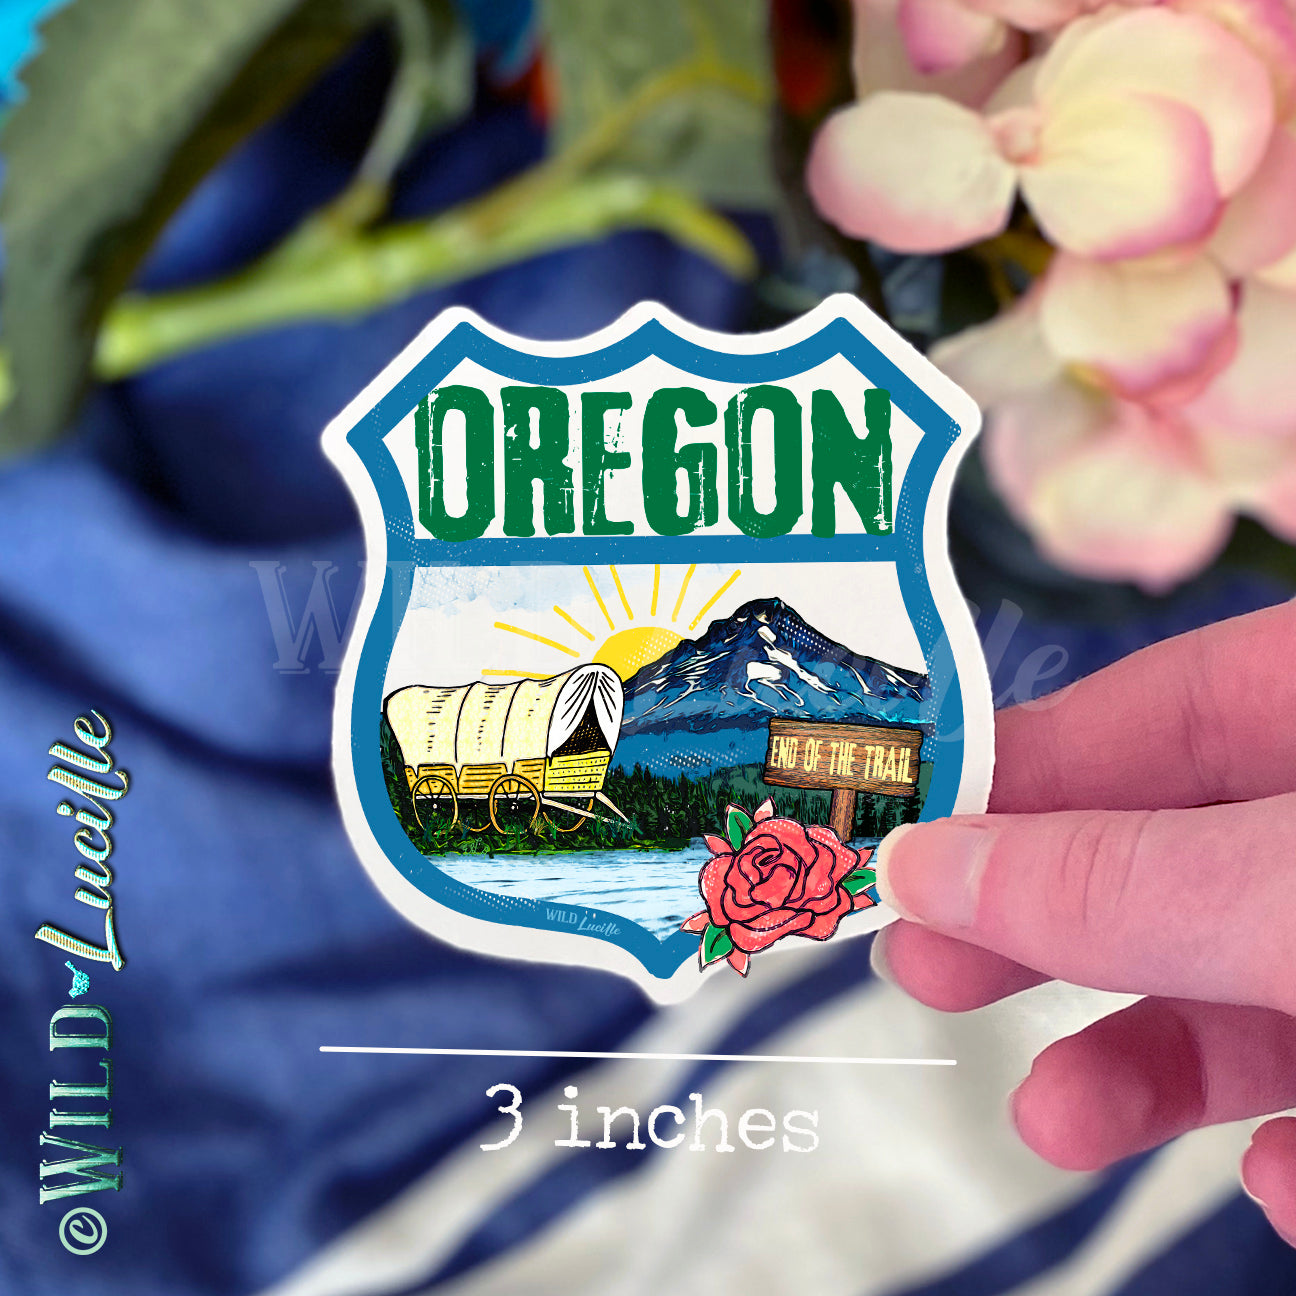 Destination Oregon - Vinyl Souvenir Sticker Decals